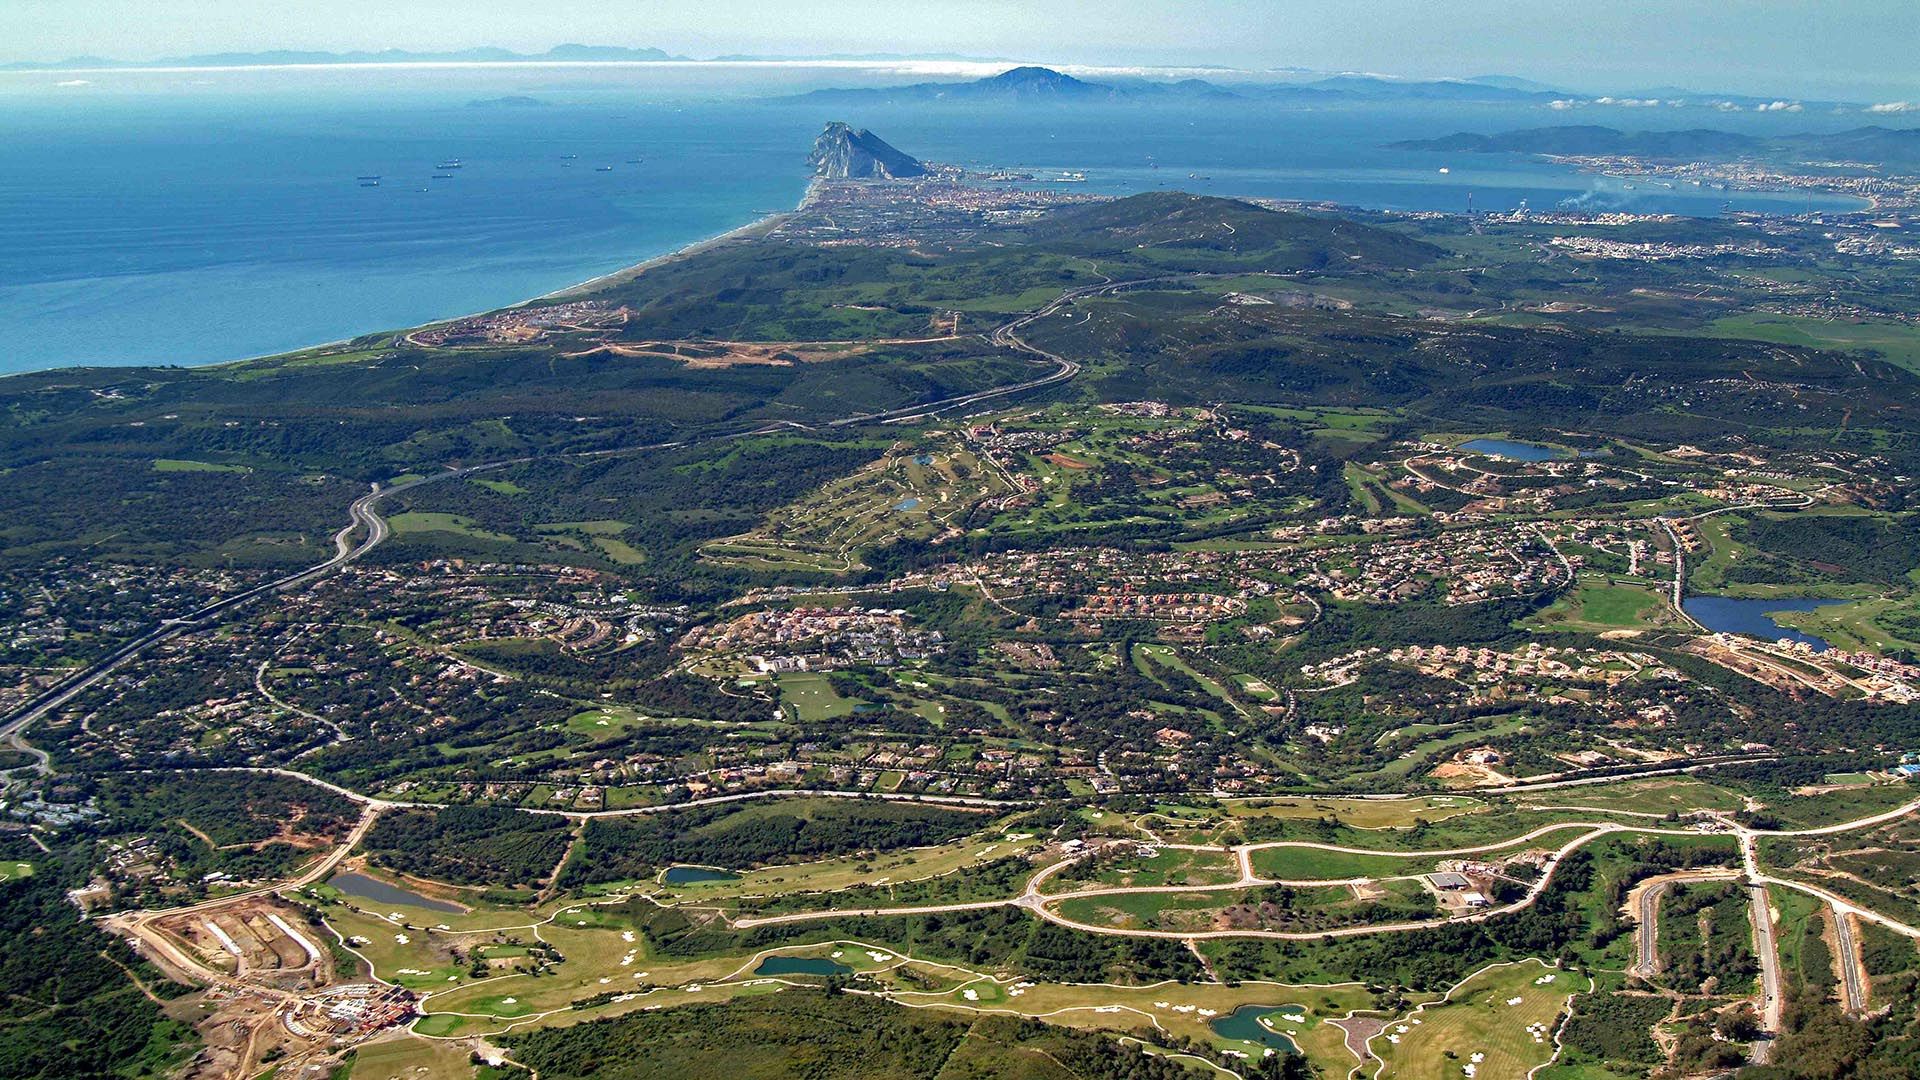 Drone view of Sotogrande, Gibraltar and Cadiz. Affordable development in Sotogrande